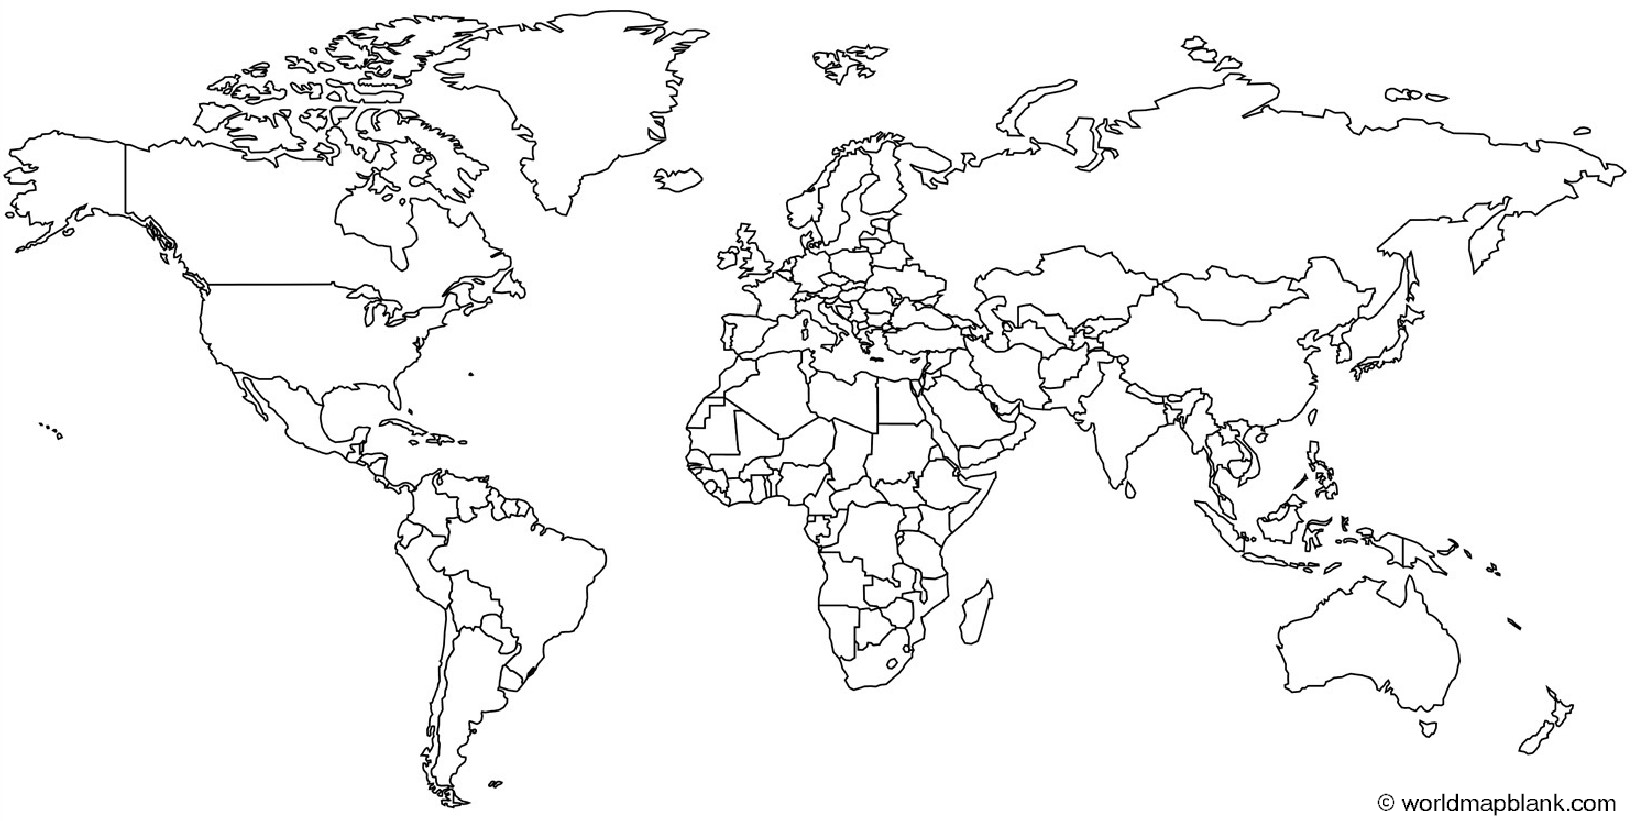 Mapamundi mudo para imprimir – mapa del mundo mudo [GRATIS]